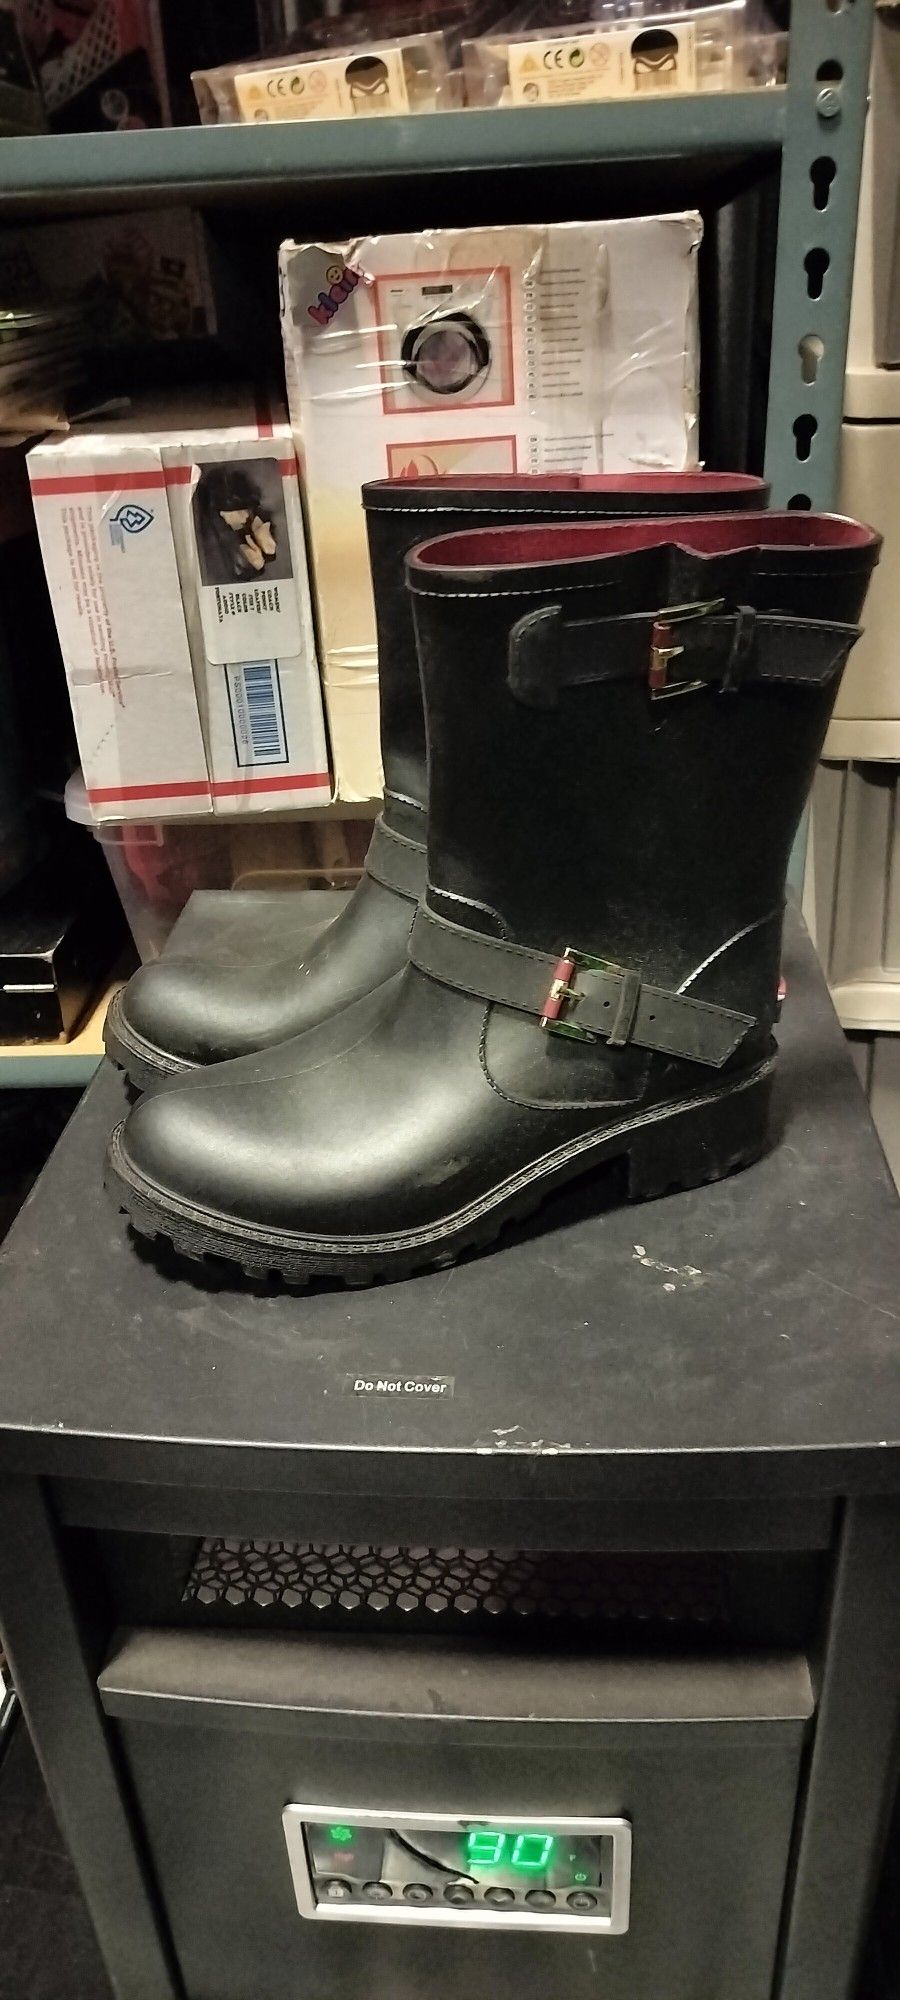 Tommy Hilfiger Rain Boots